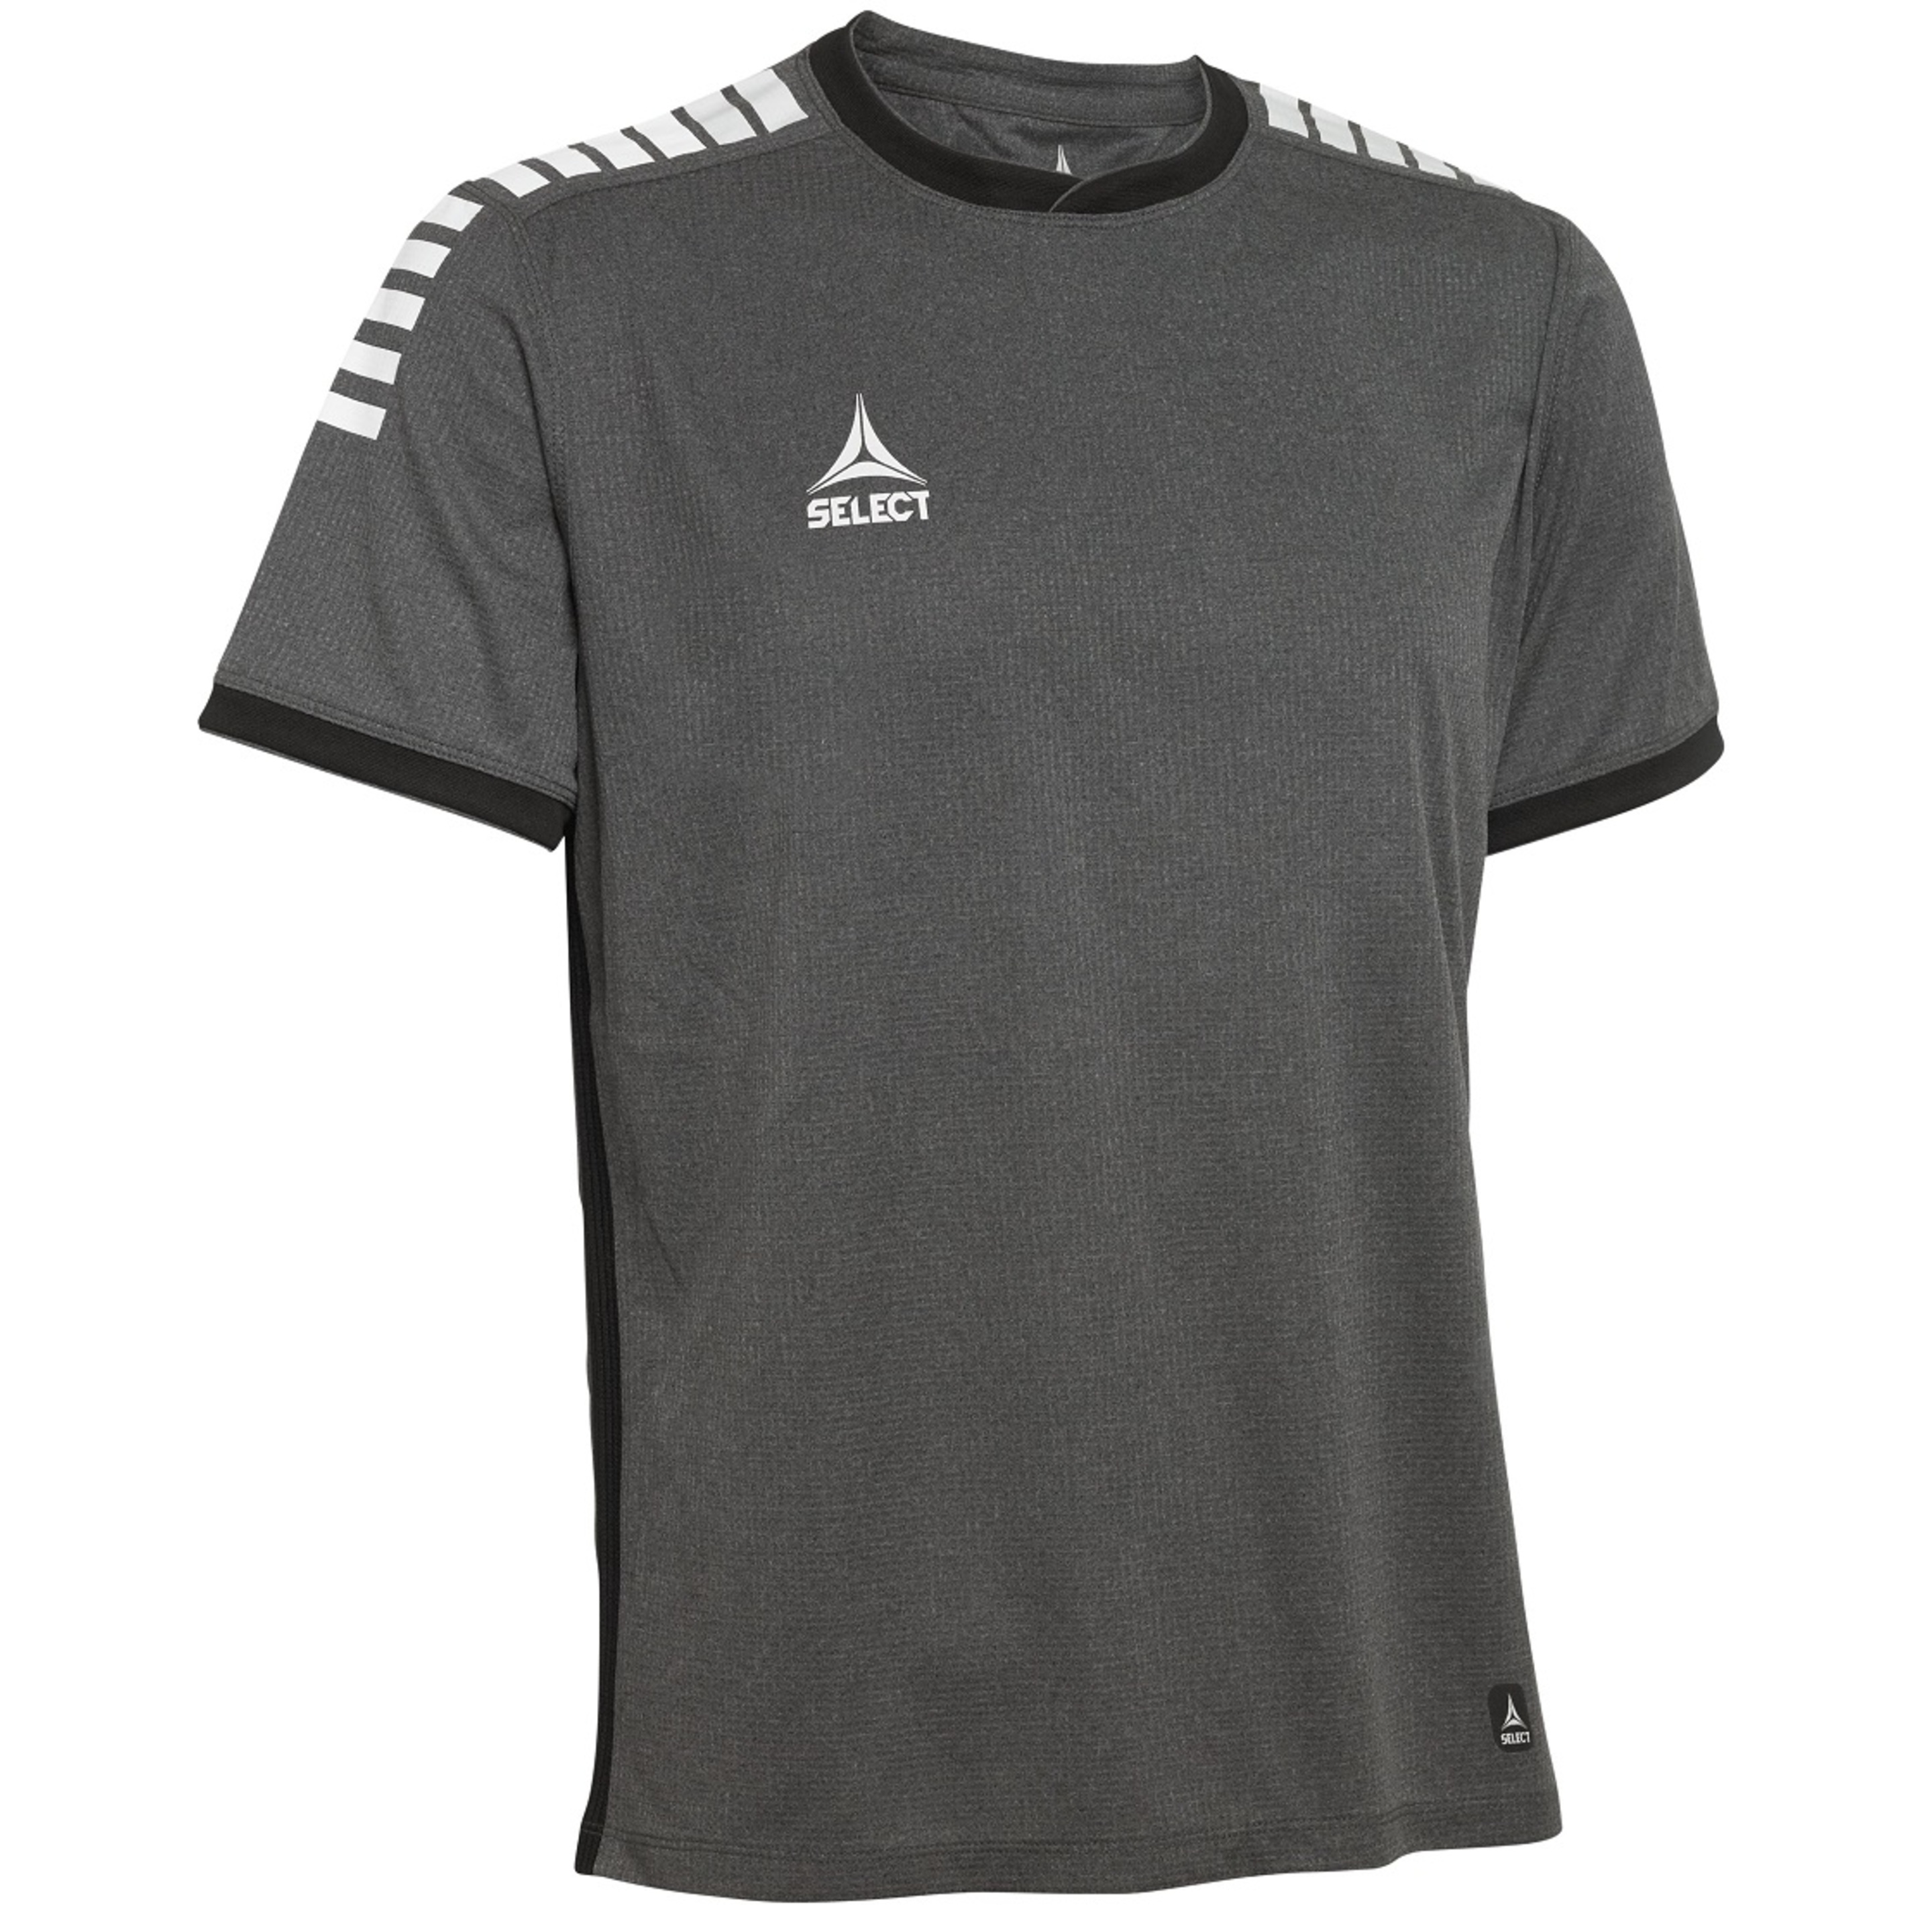 Camiseta Mónaco Select - gris - 